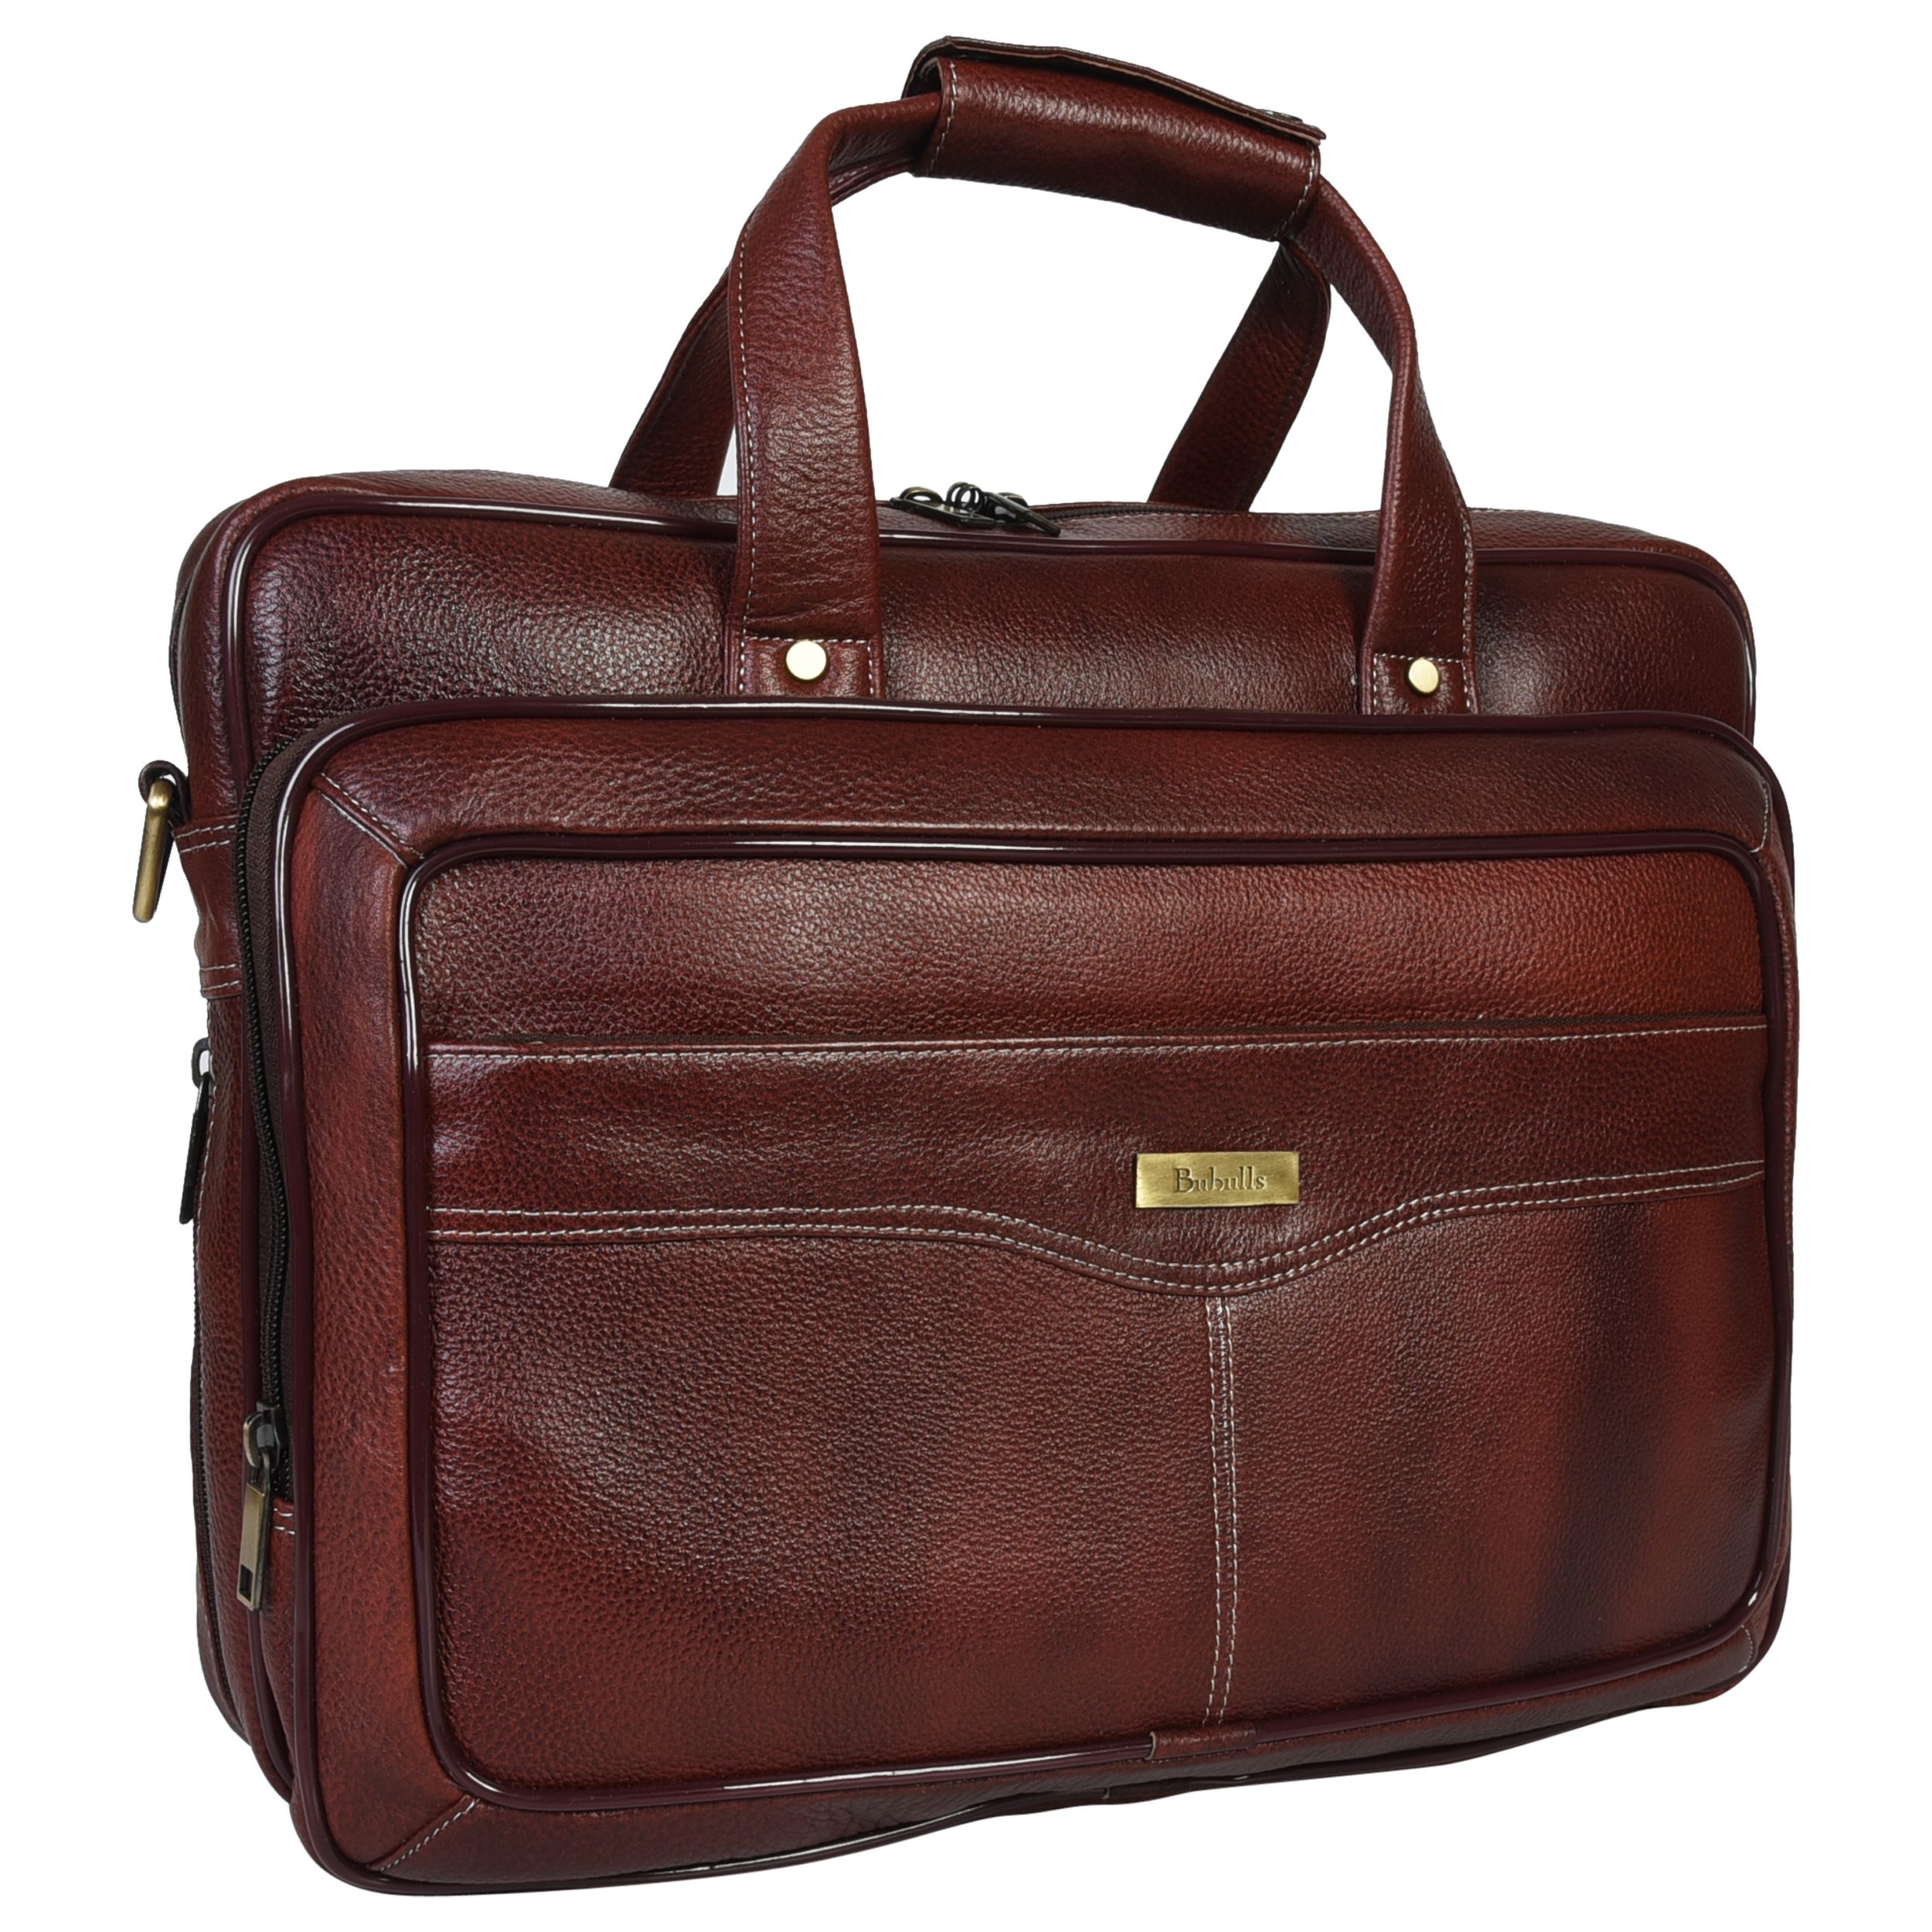 bubulls WG-1022 Brown Leather Office Bag - Buy bubulls WG-1022 Brown ...